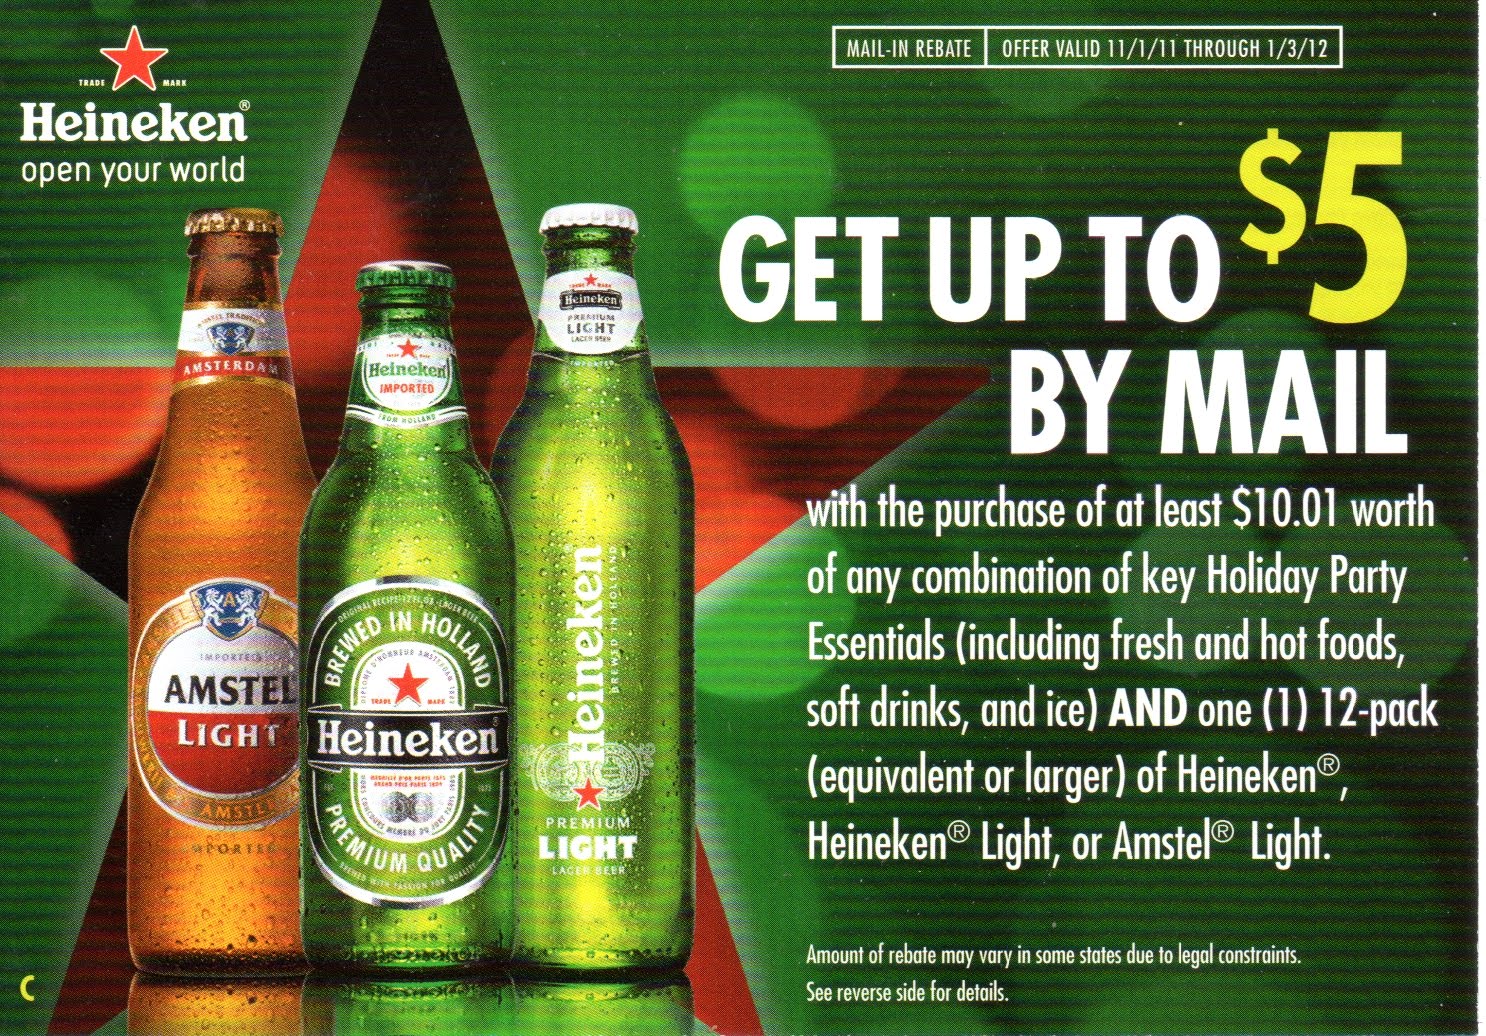 coupon-stl-heineken-beer-rebate-save-5-by-mail-on-holiday-party